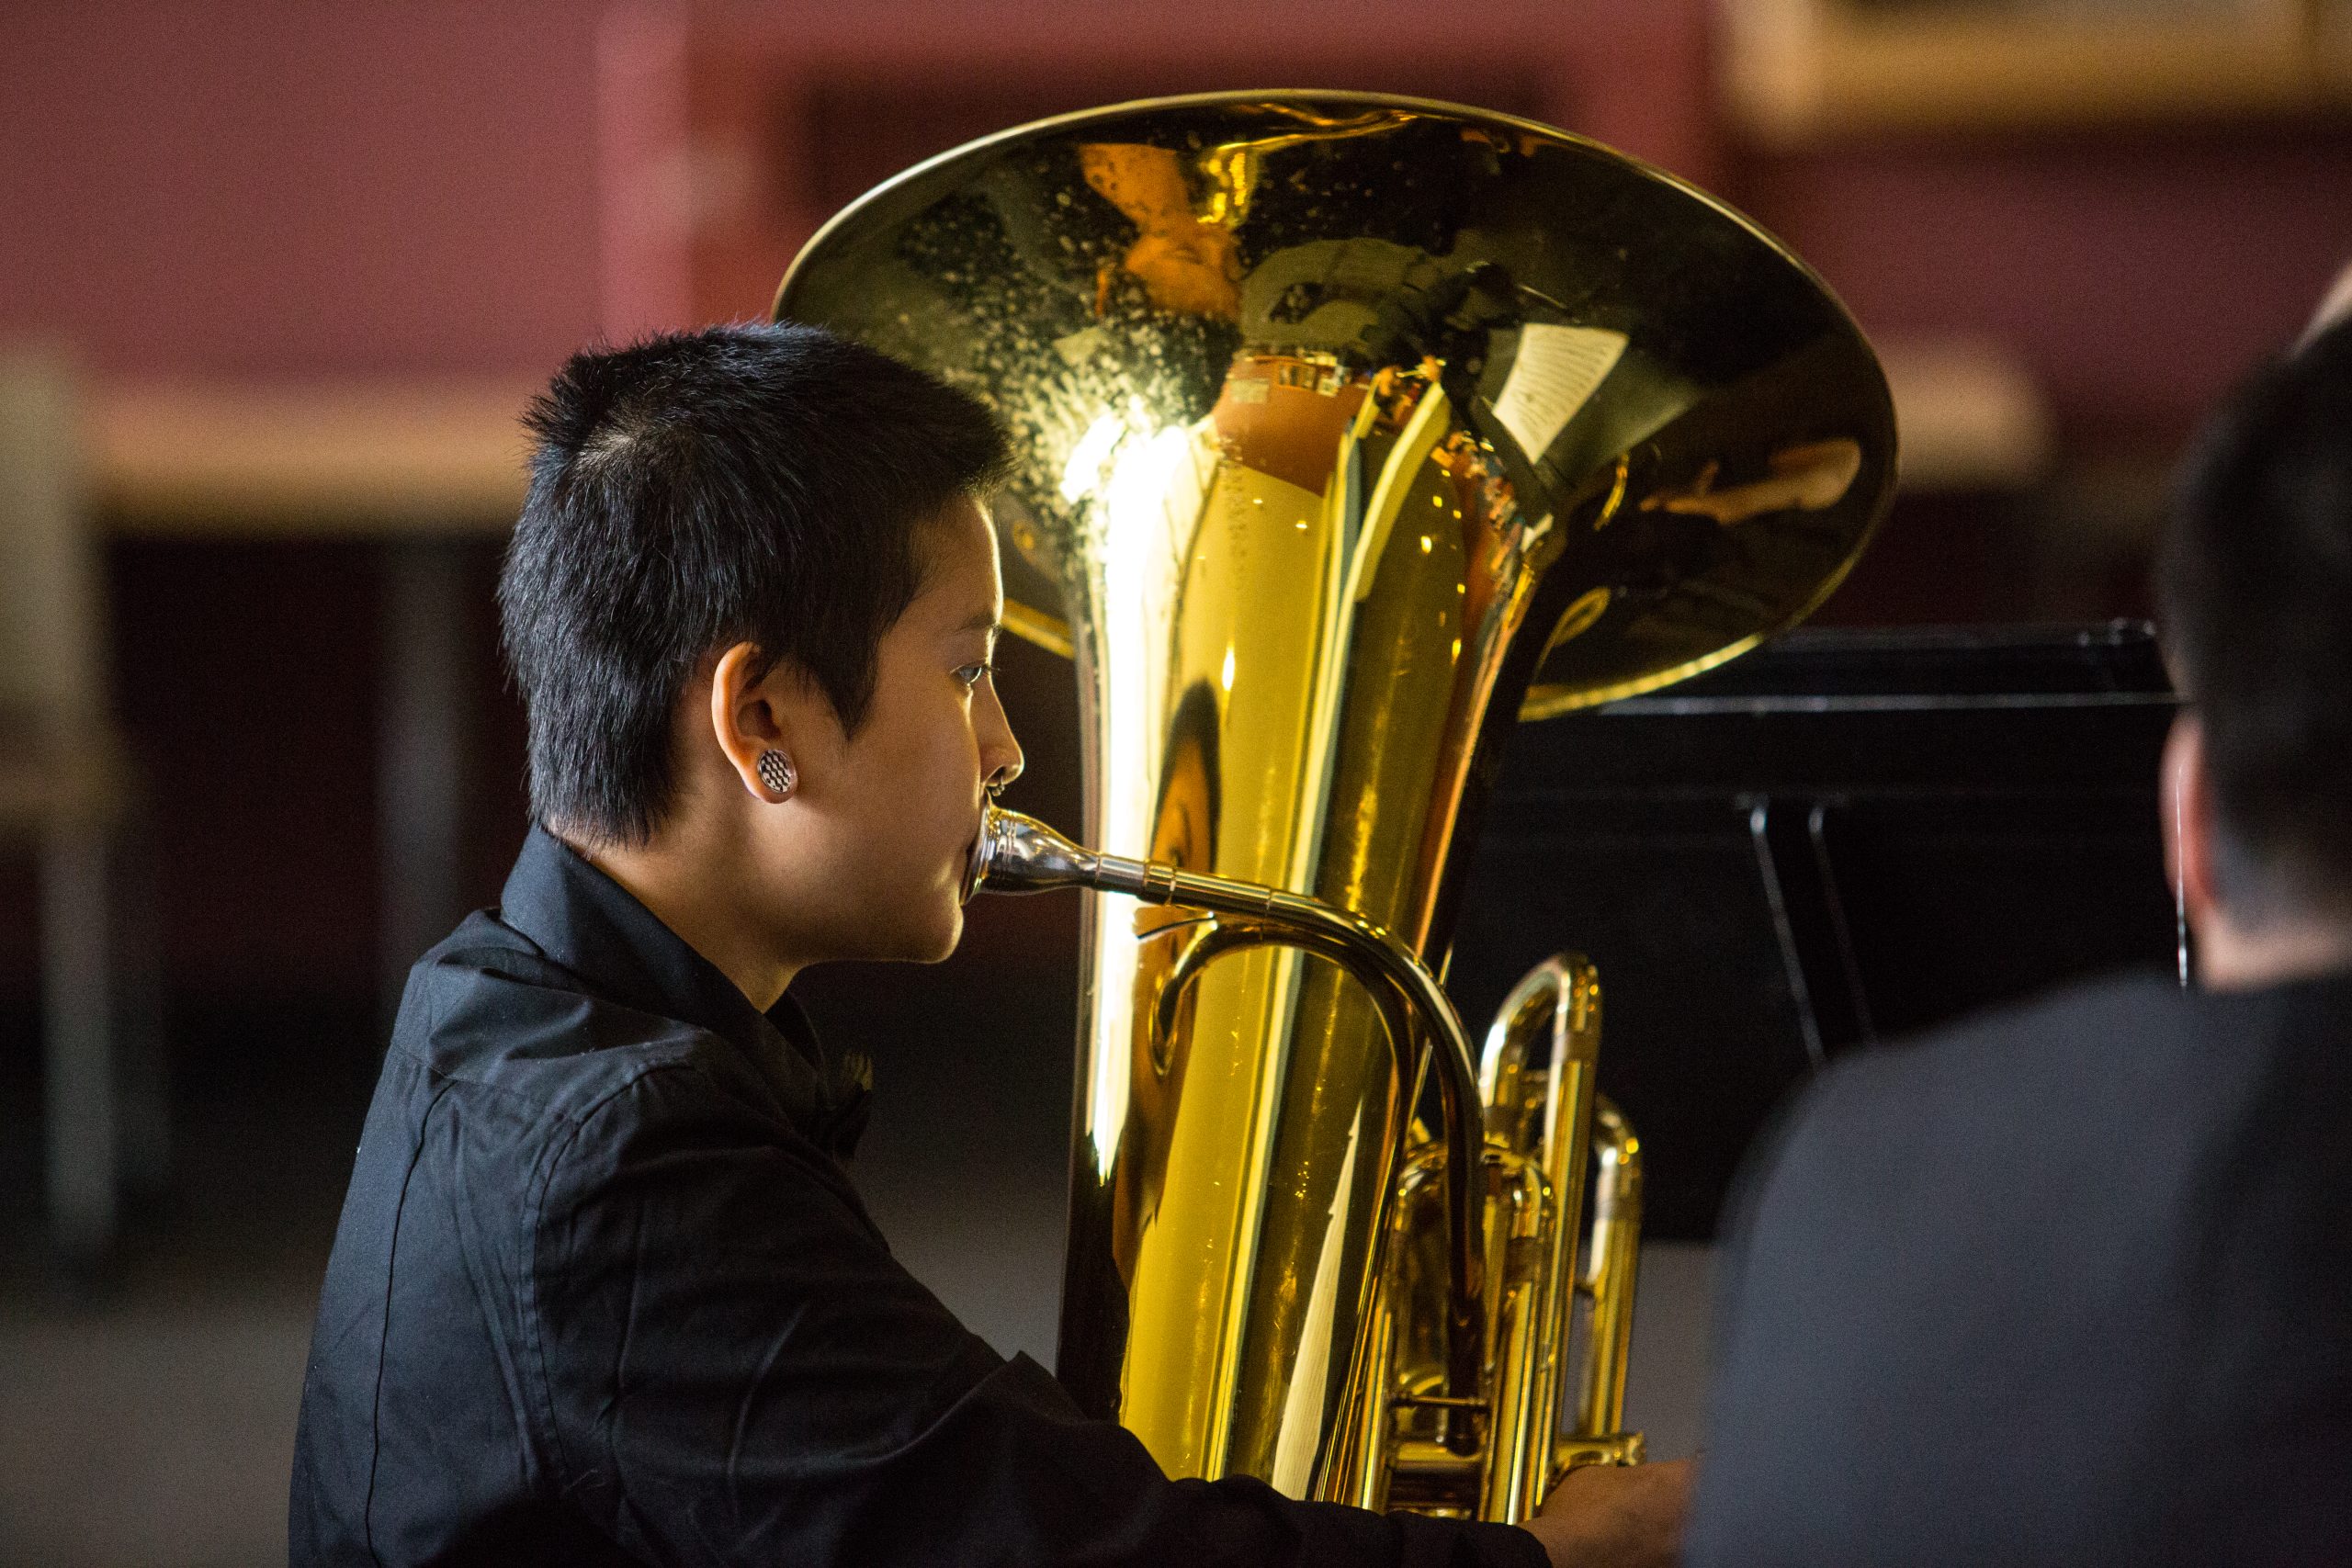 a student playing a tuba